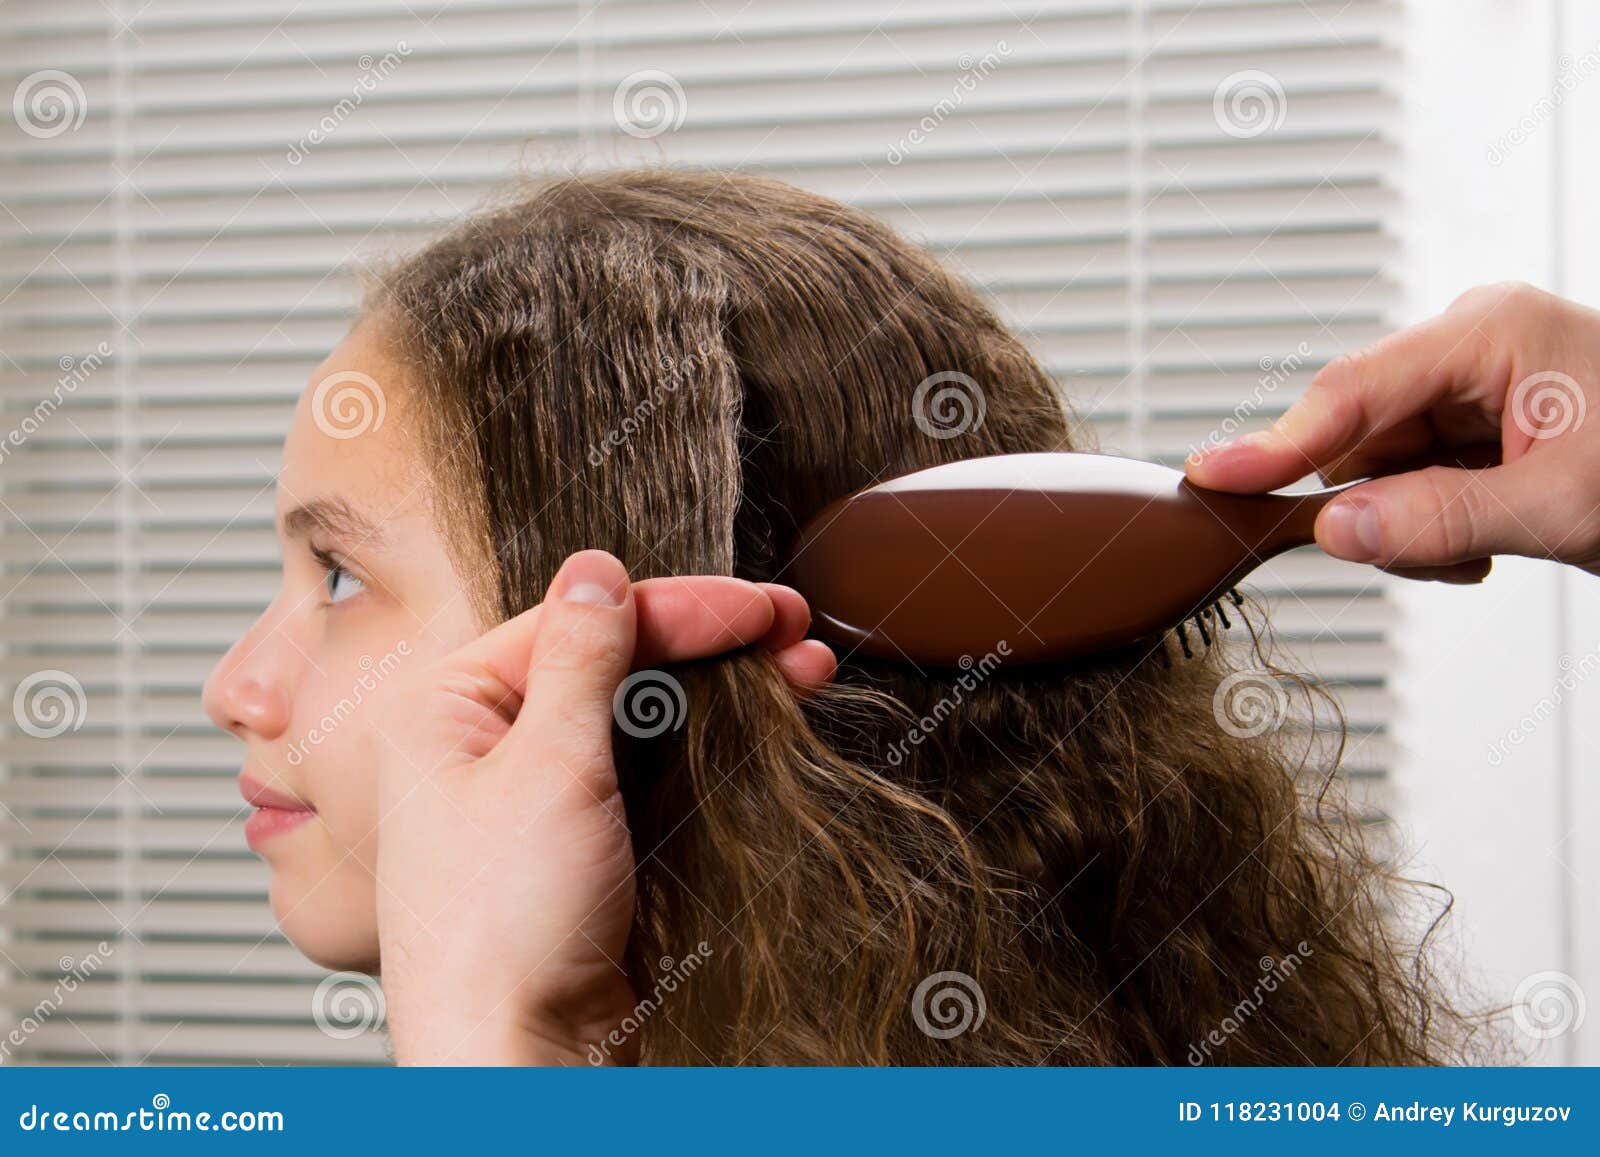 Sitting on a hair brush